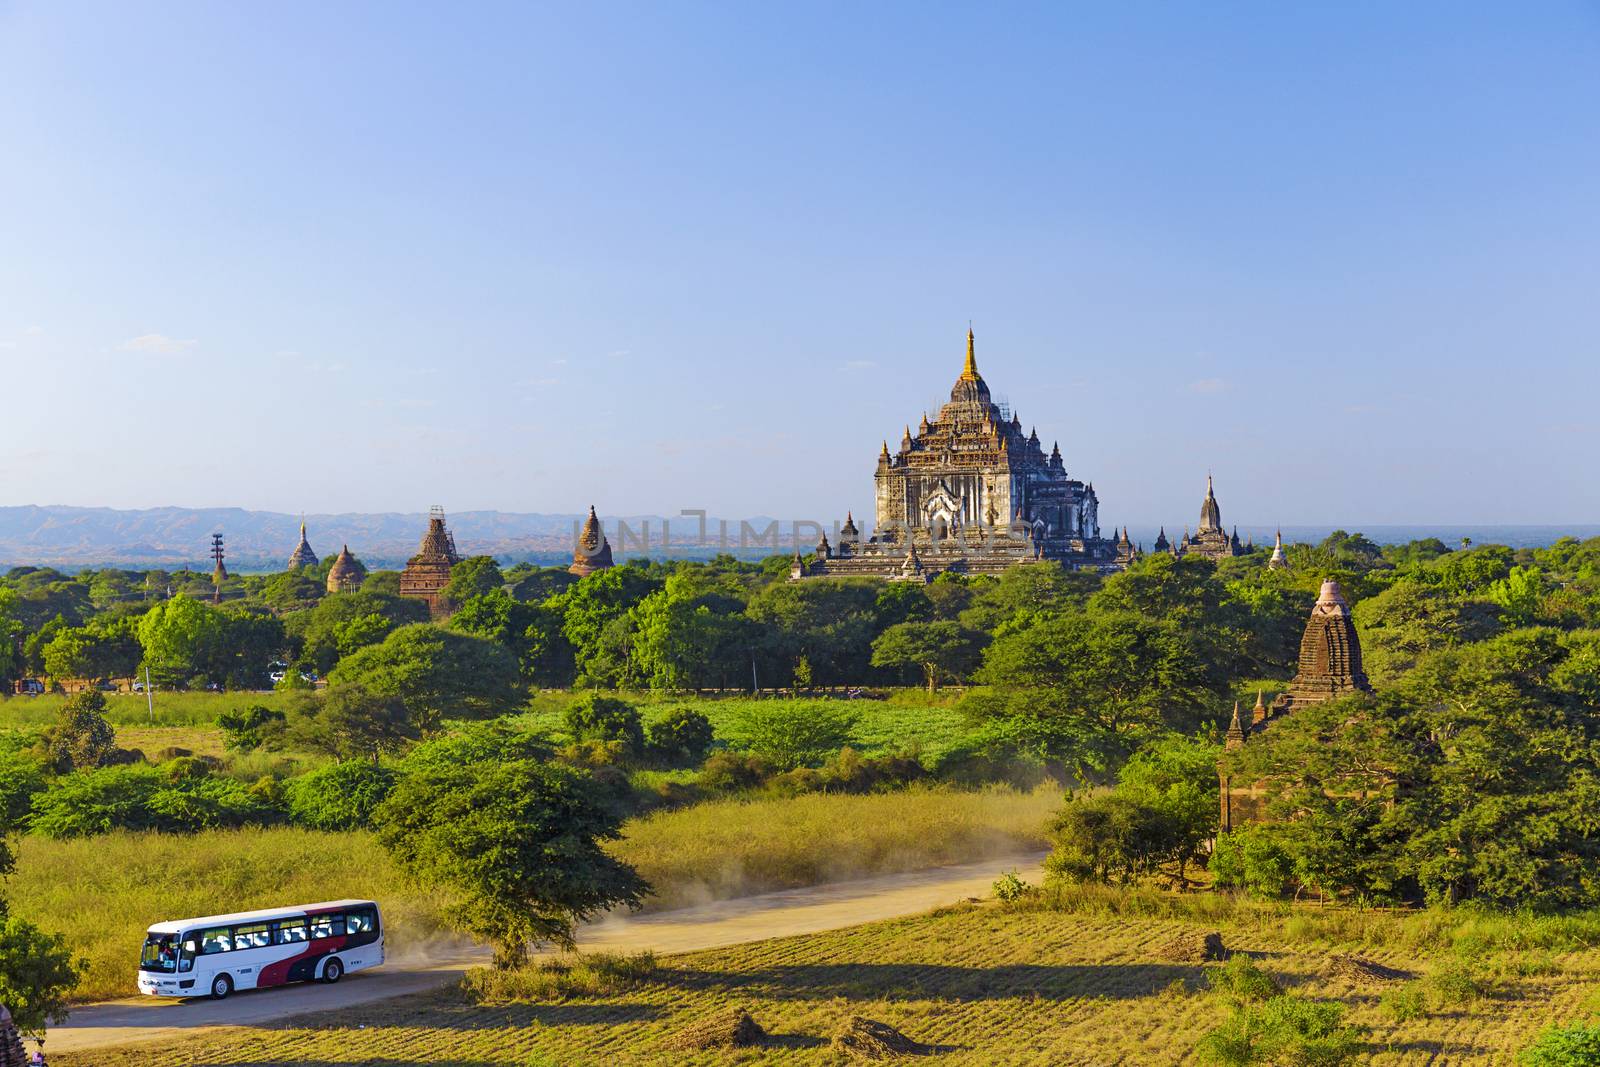 Bagan buddha tower at day by cozyta